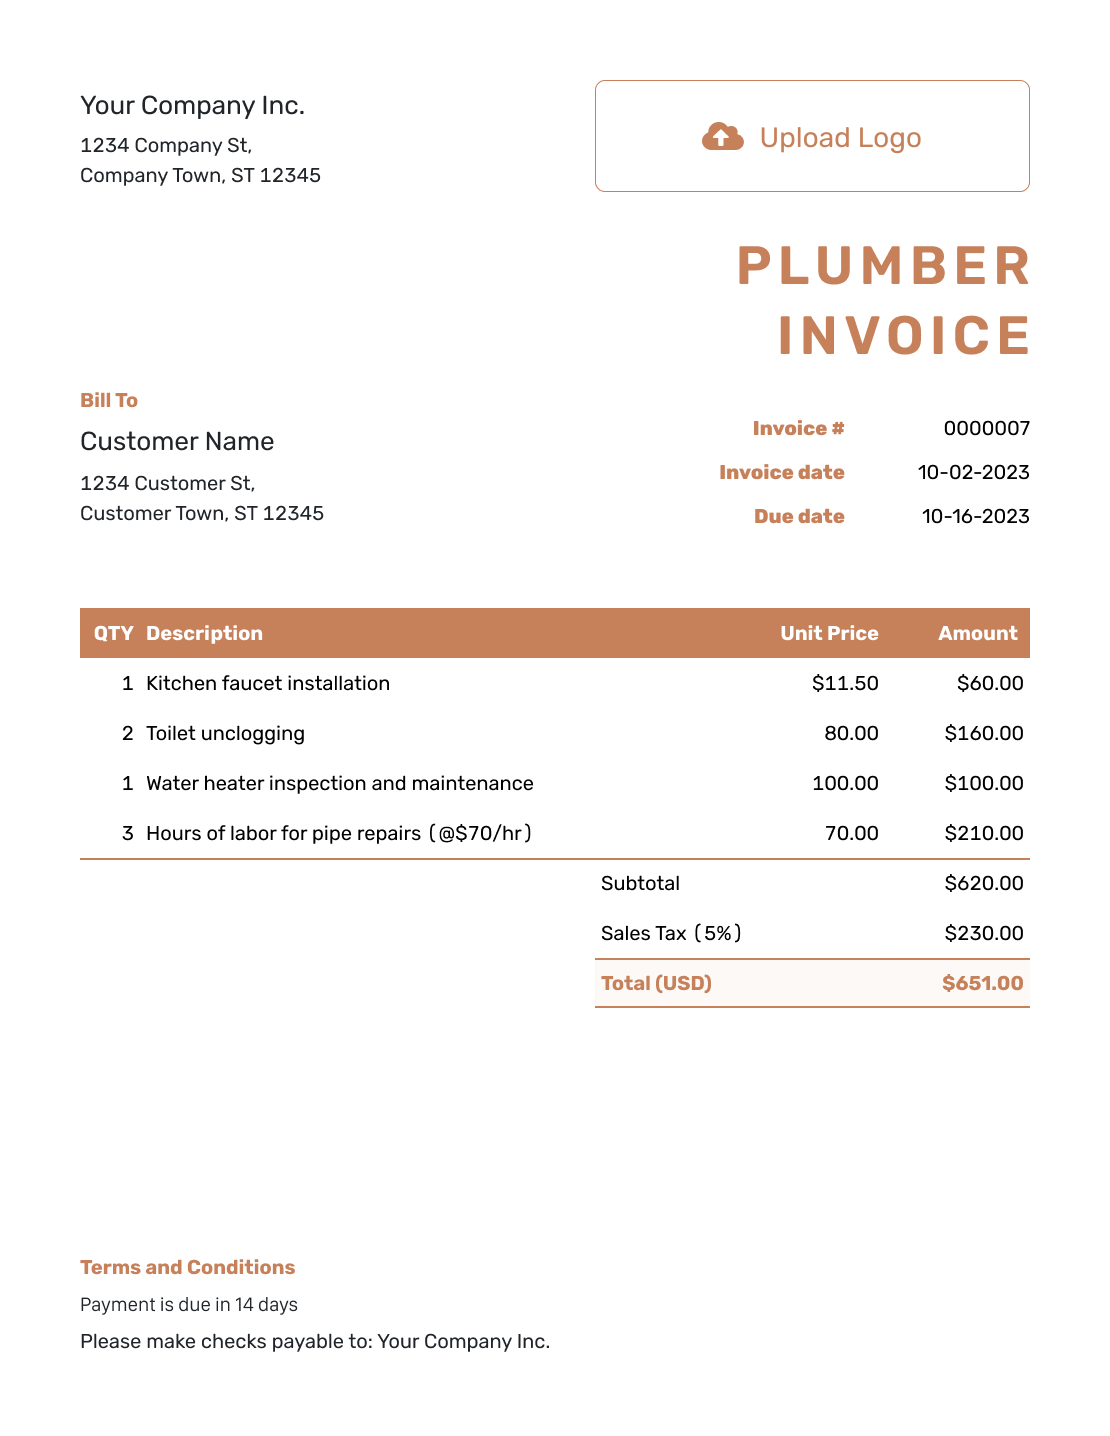 Standard Plumber Invoice Template